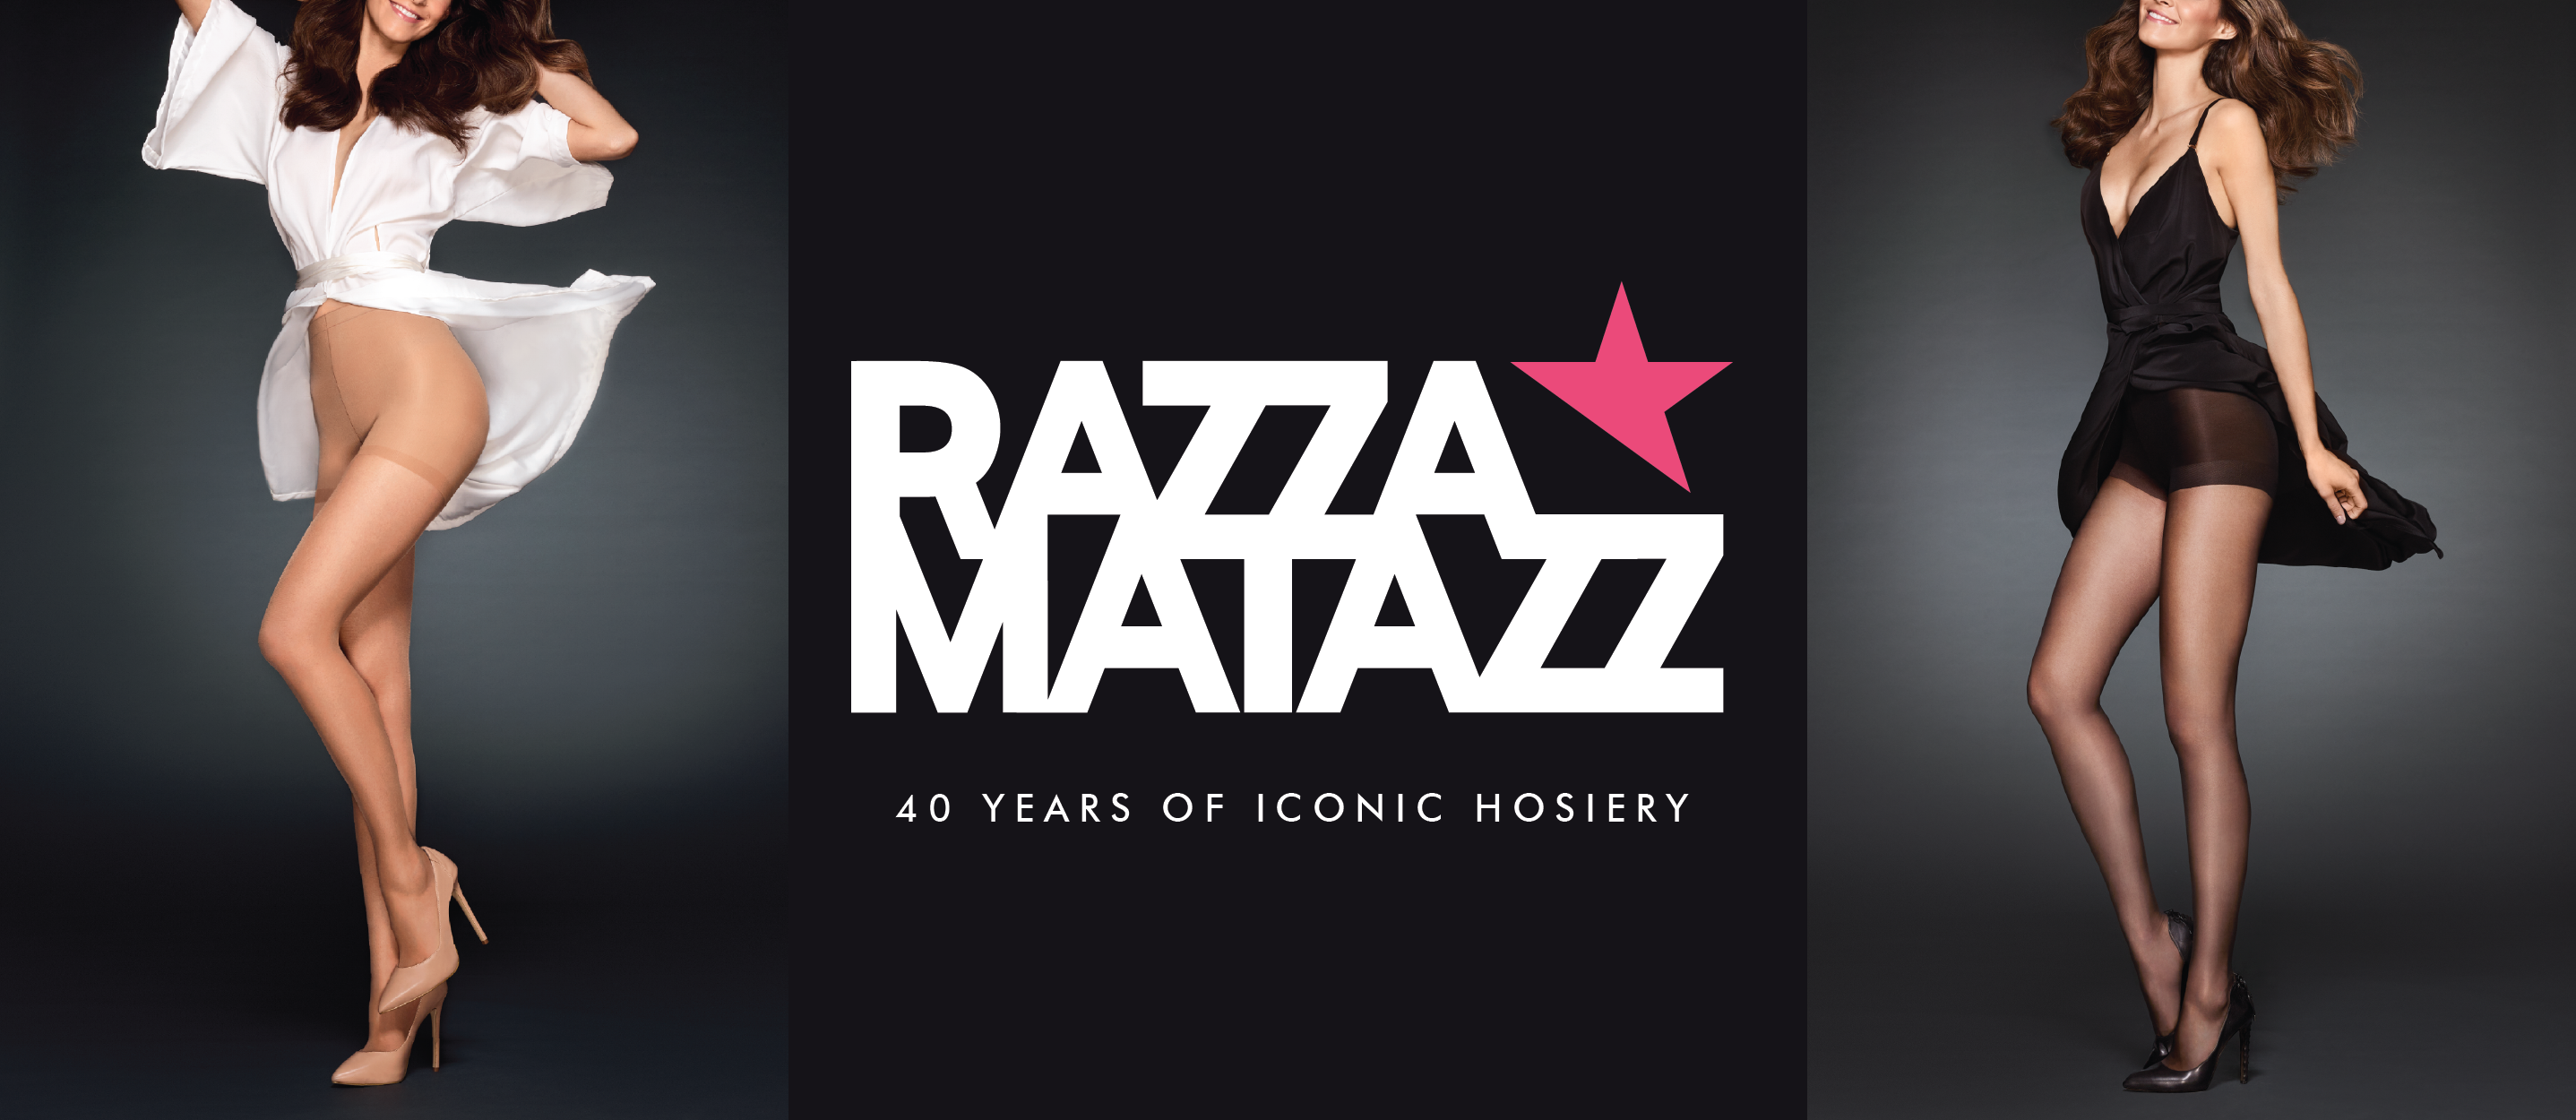 Razzamatazz Banner